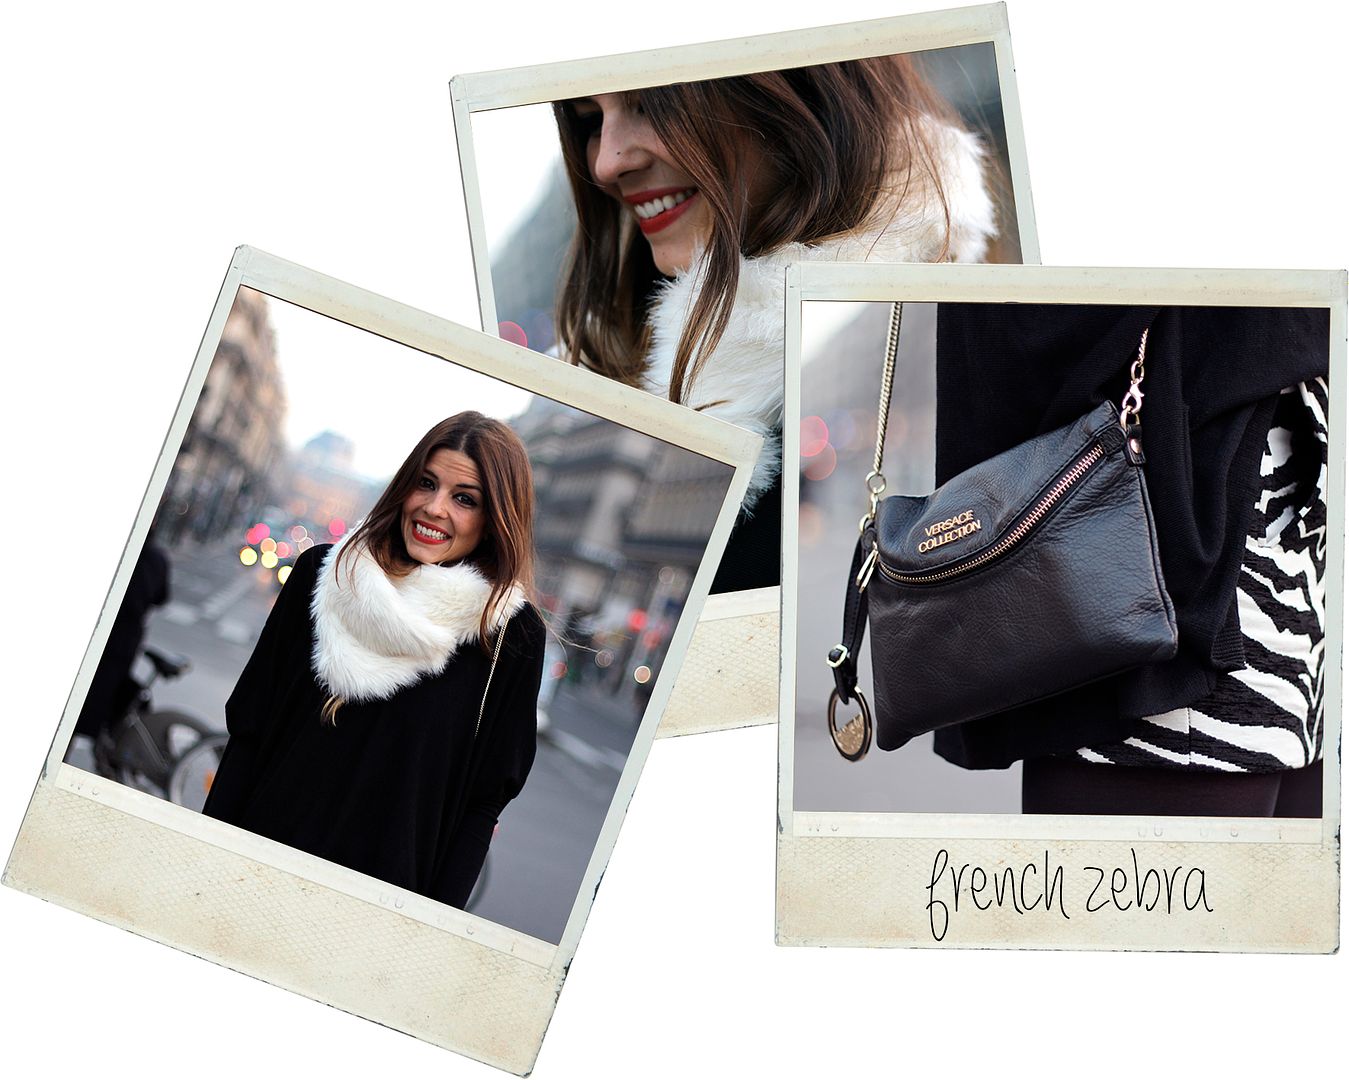  photo street_style-trendy_taste-look-outfit-zebra_skirt-versace_bag-white_scarf-fur-oversize-black_and_white-sandals-zebraprint-po_zps4ffd82c9.jpg